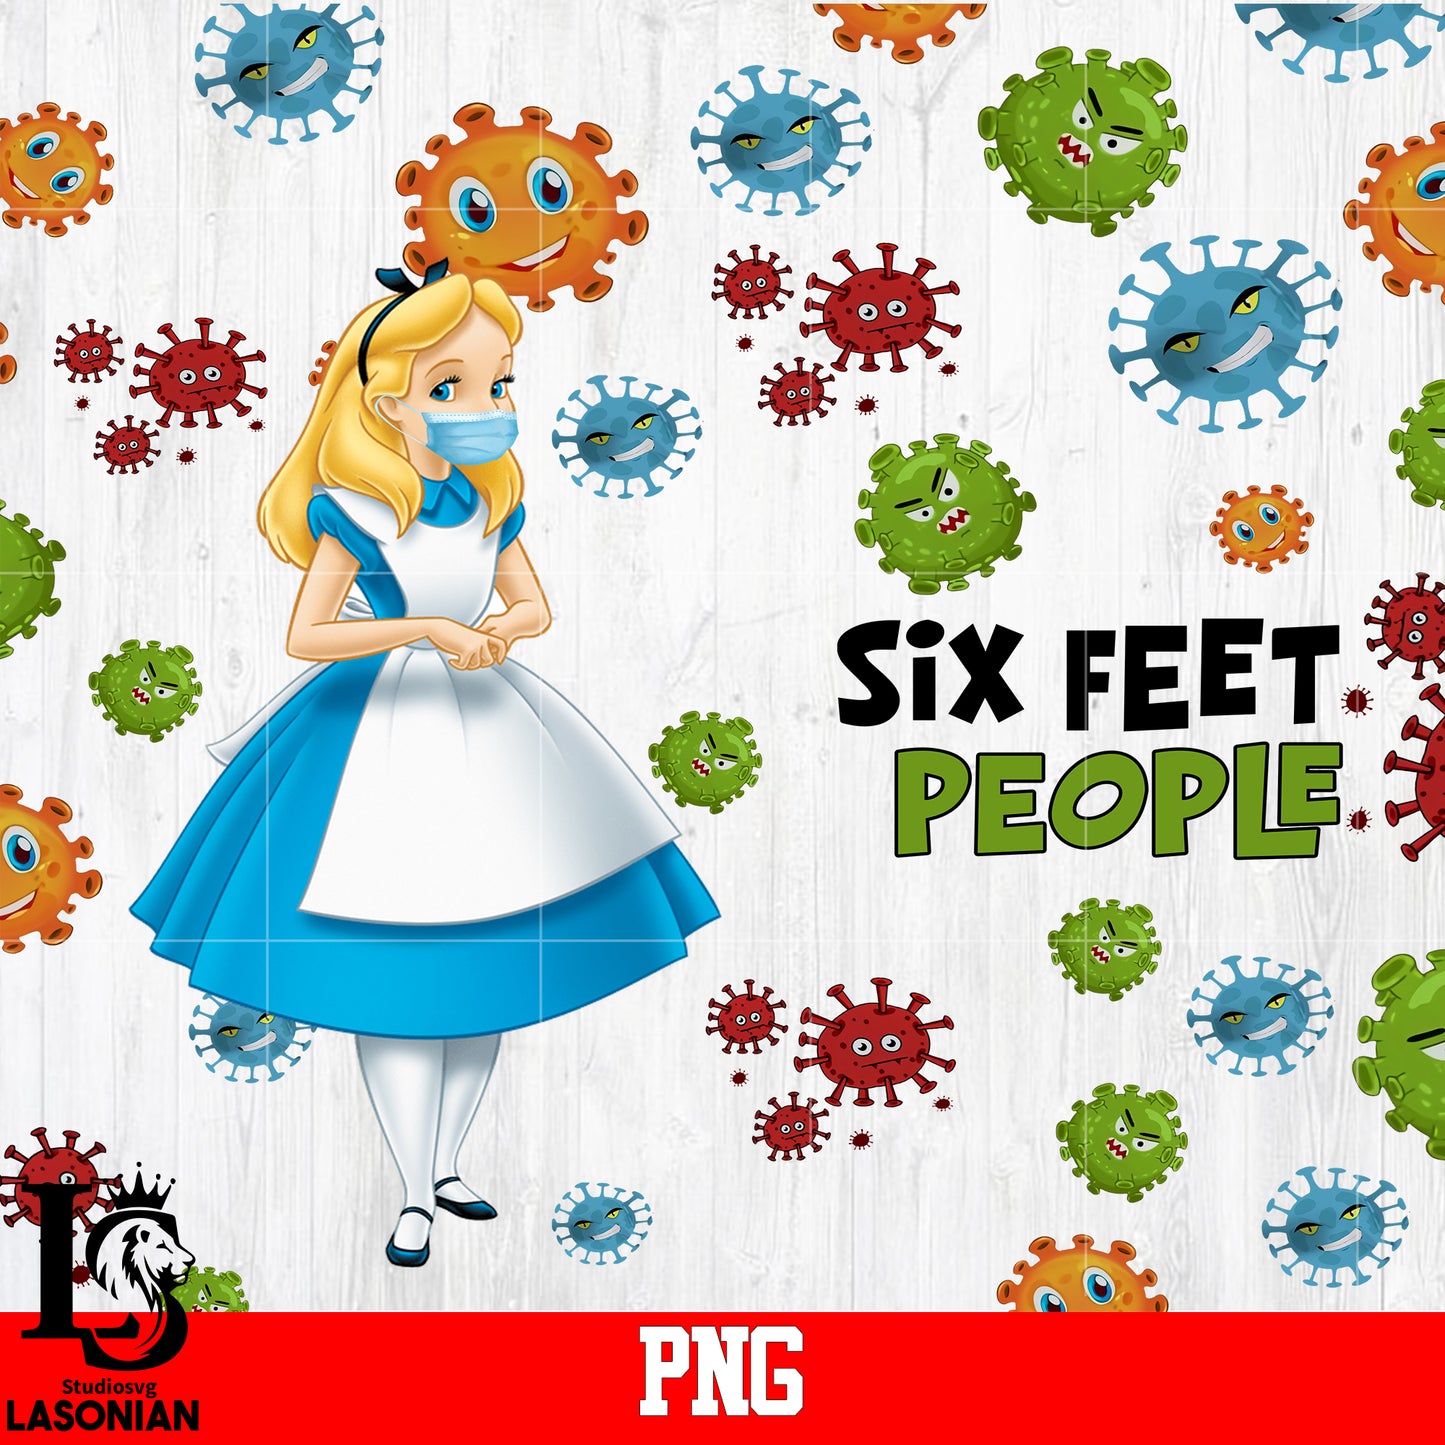 Six Feet People PNg file